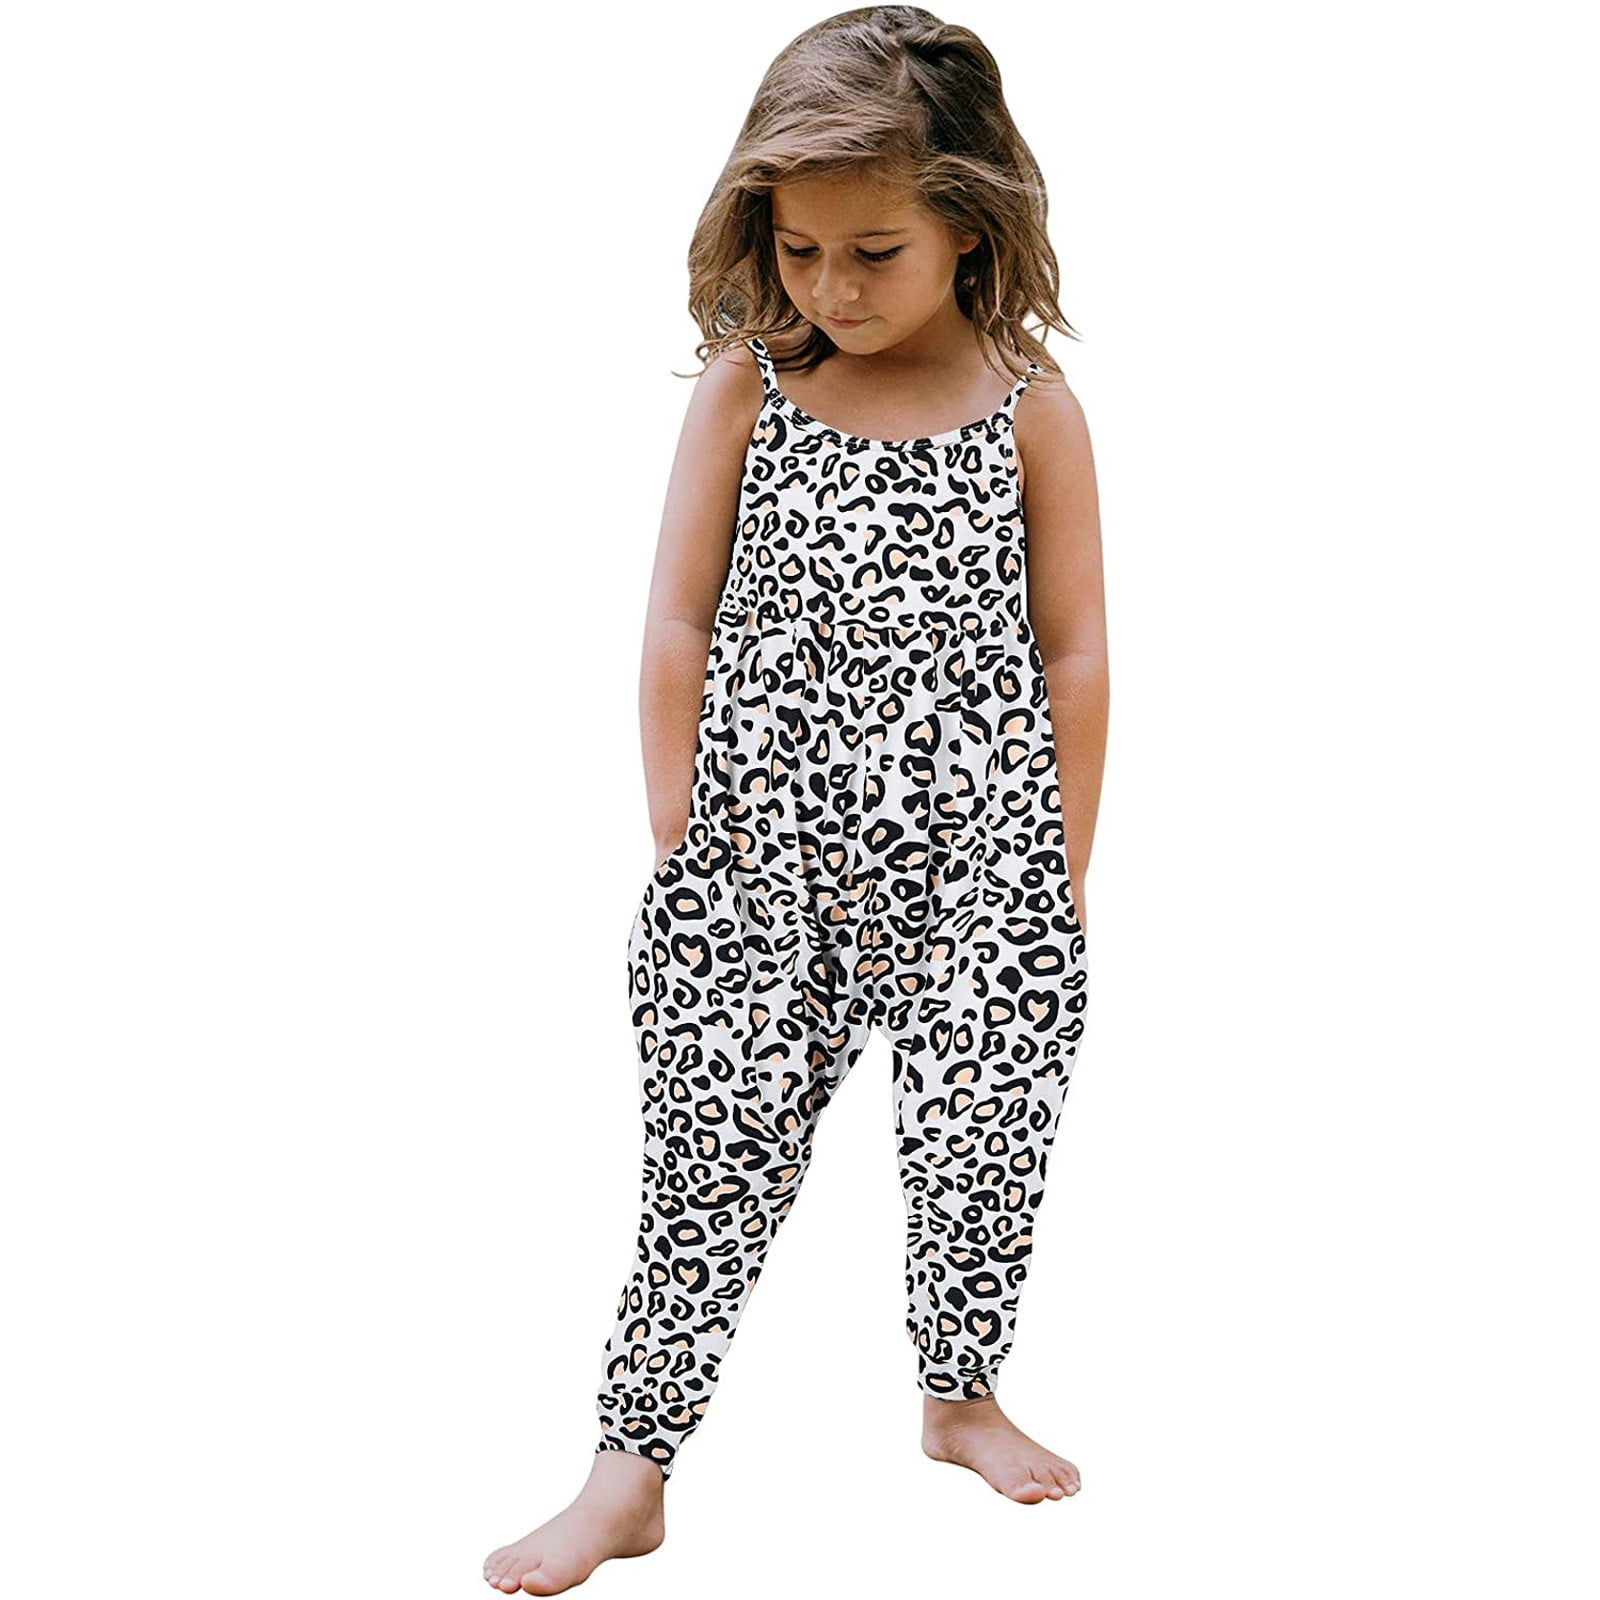 Toddler Kids Baby Girl Strap Romper Jumpsuit Sunsuit Harem Pants Outfit Clothes 